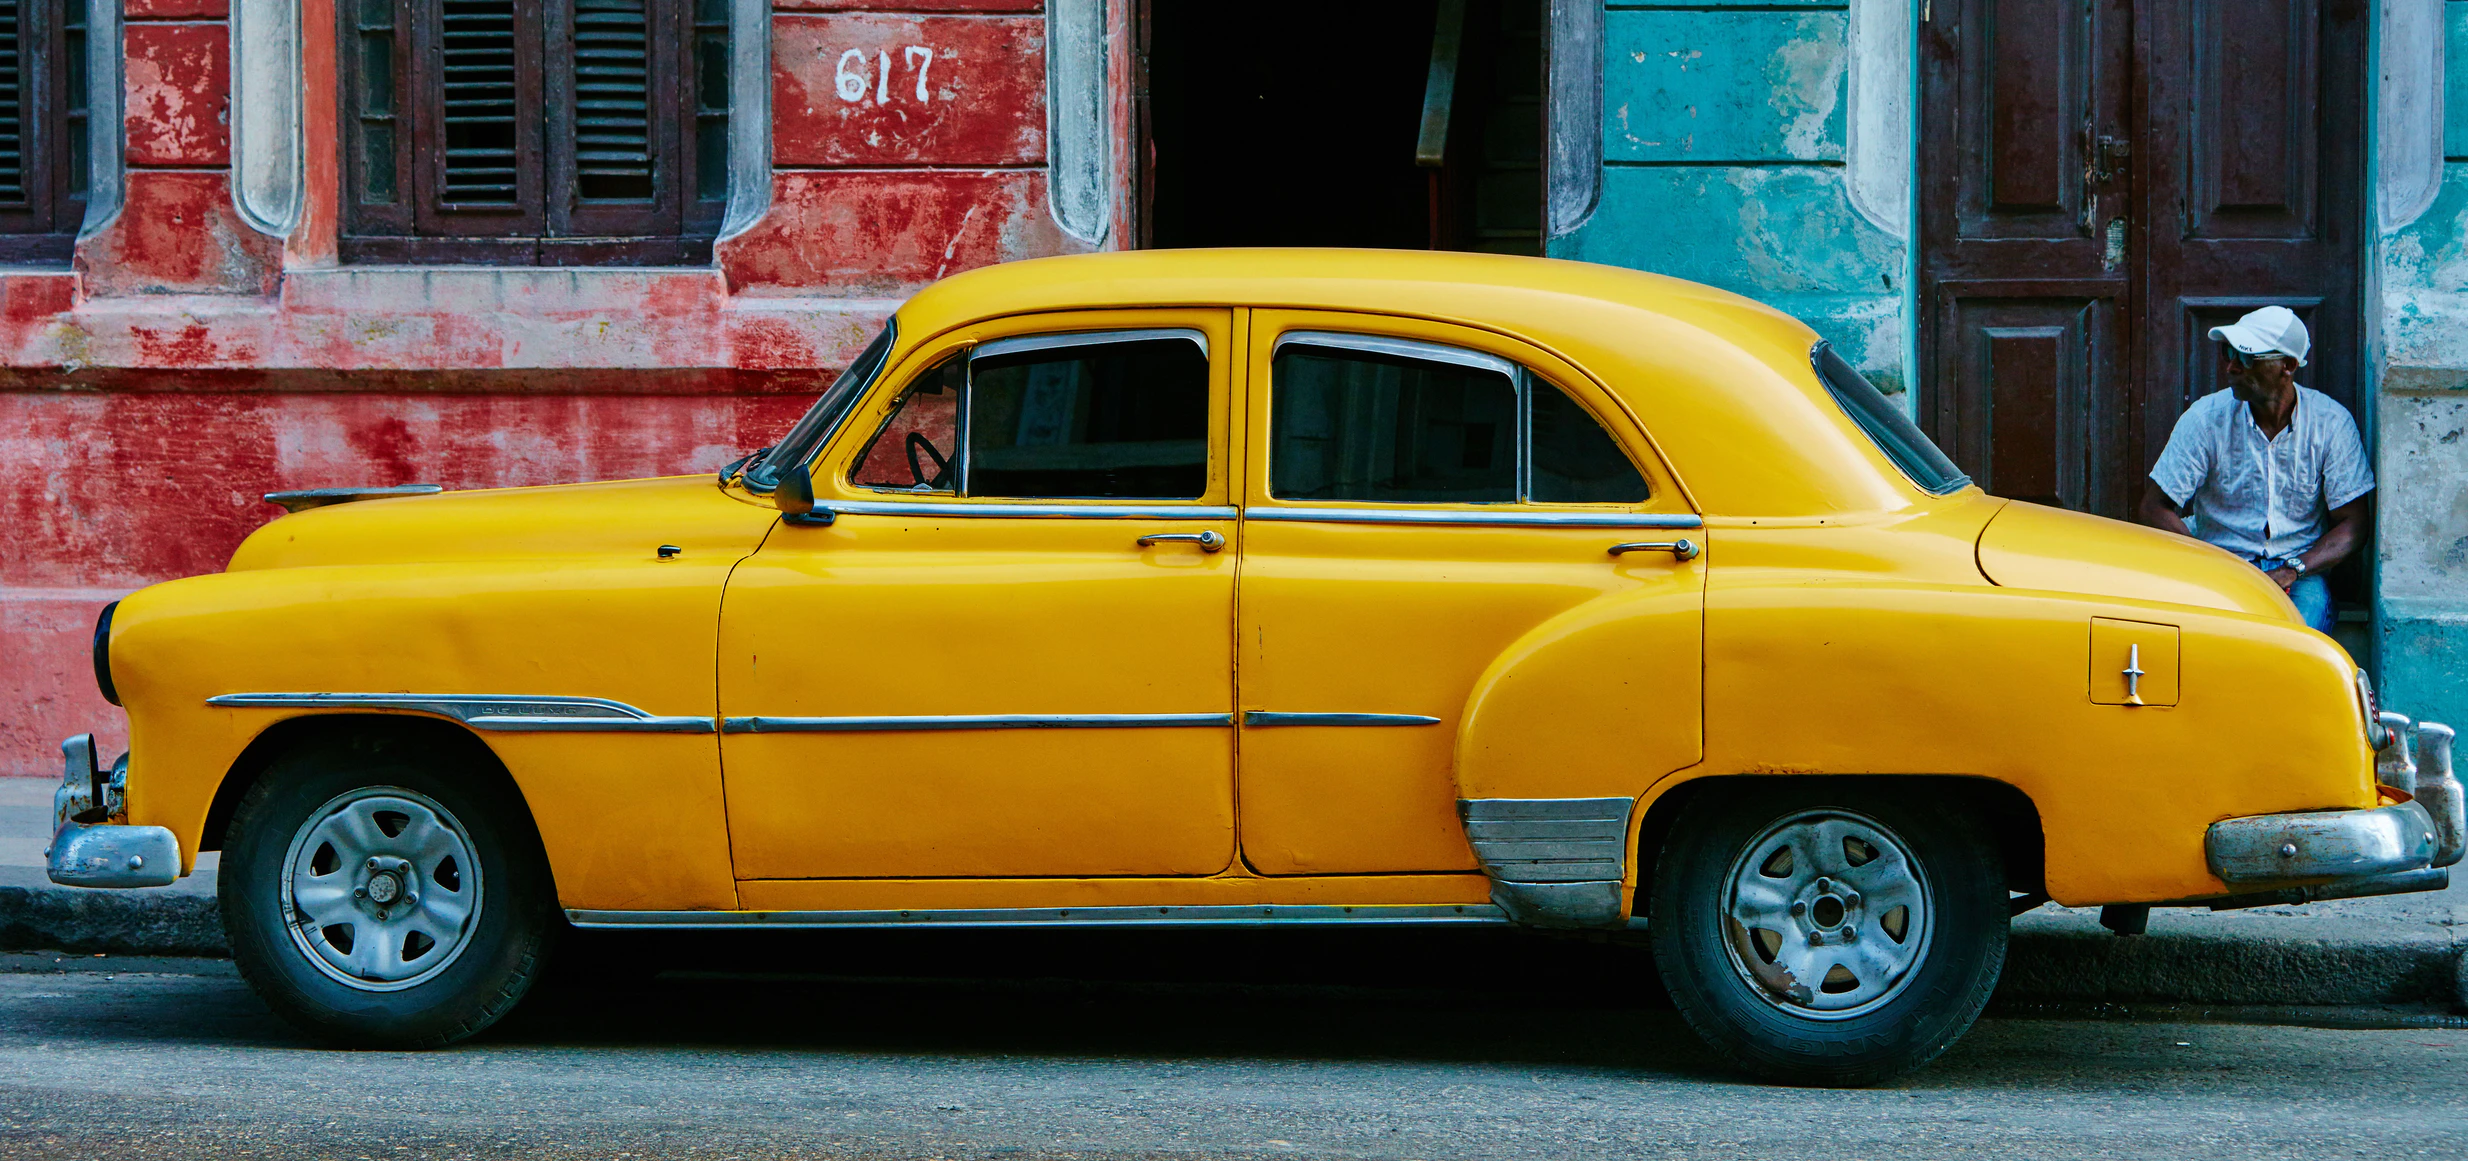 A yellow Sedan parked near the road. | Source: Unsplash